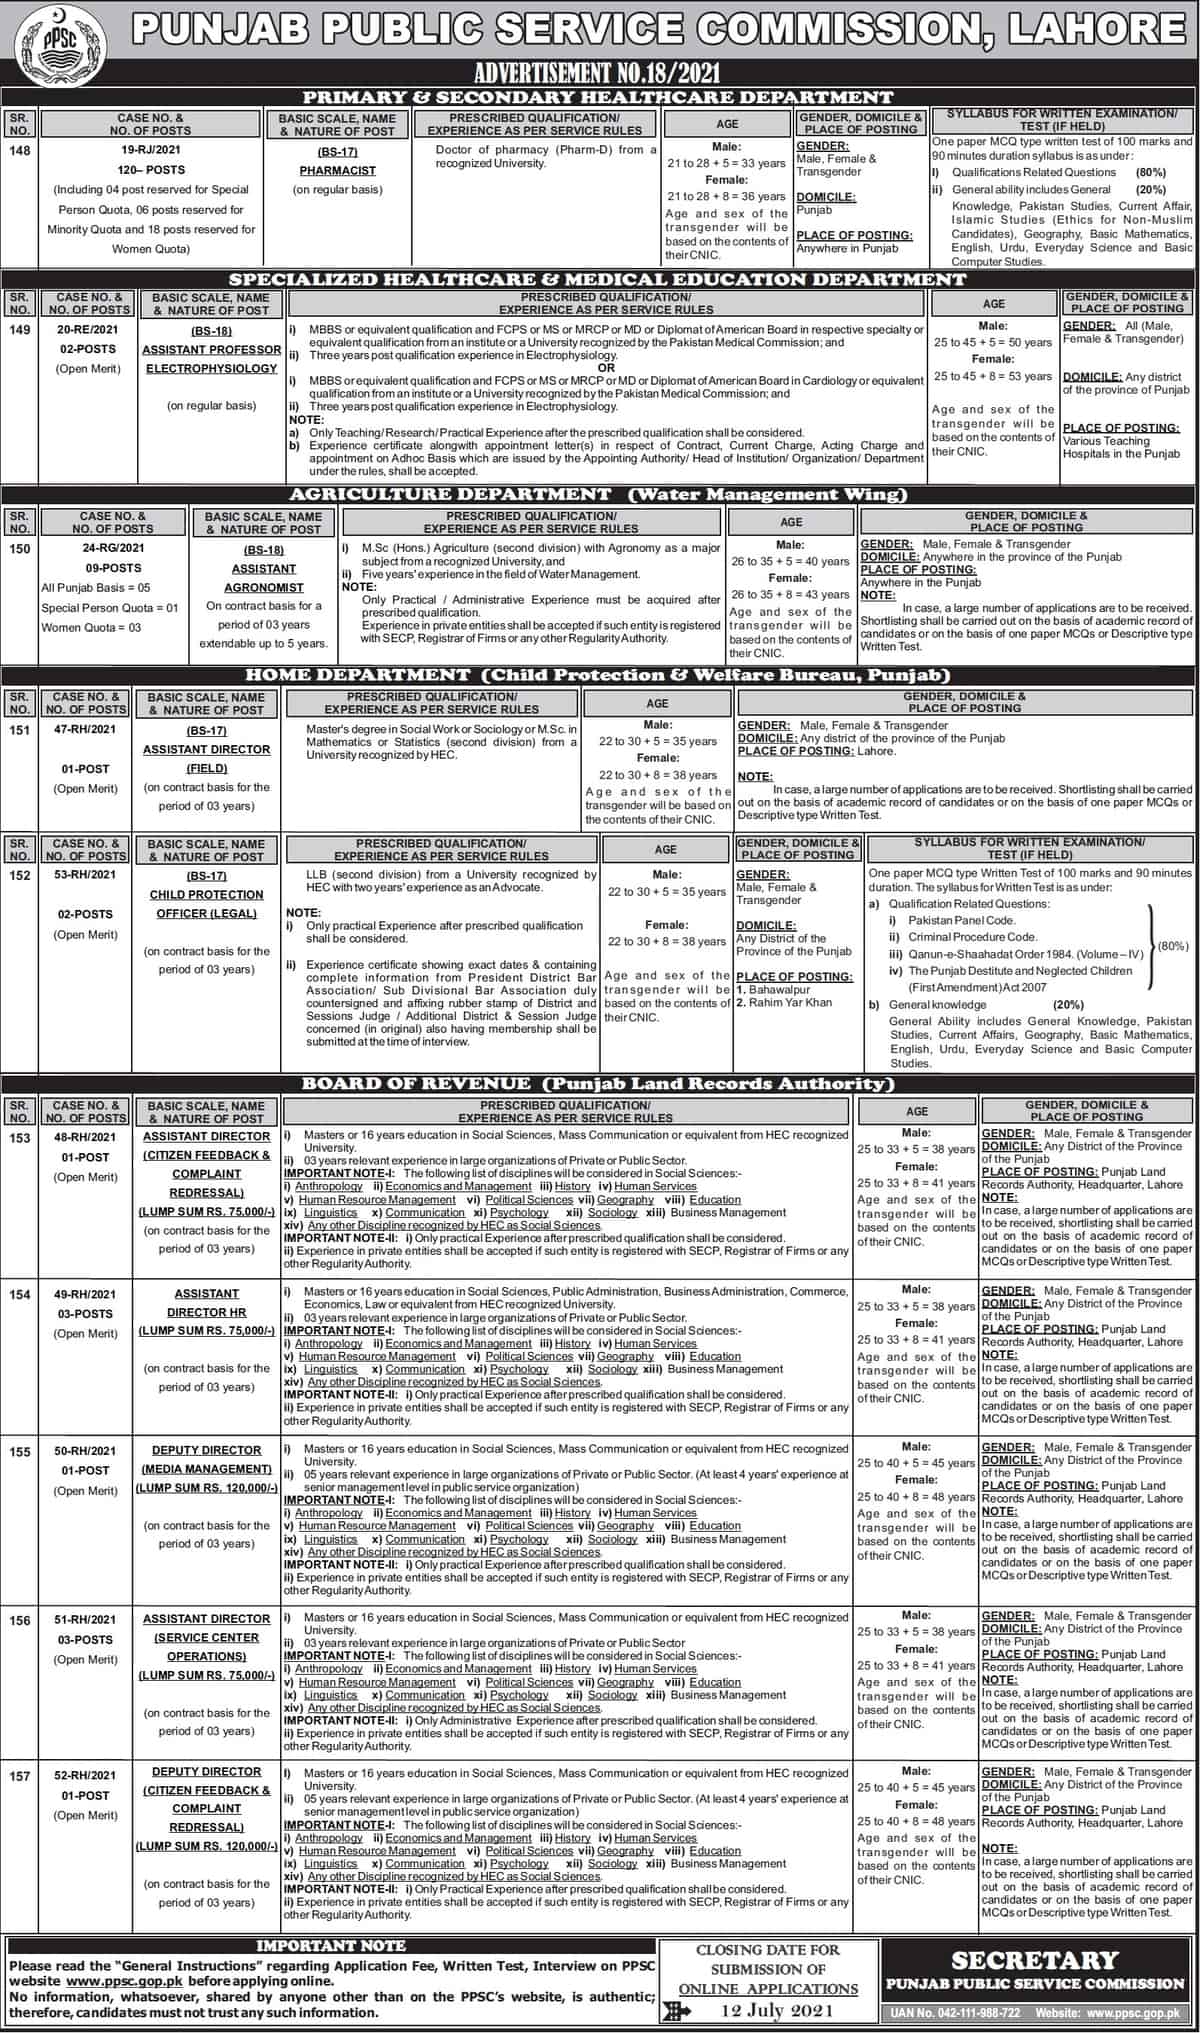 PPSC Jobs 2021 Advertisement No 18 www.ppsc.gop.pk Apply Online Latest